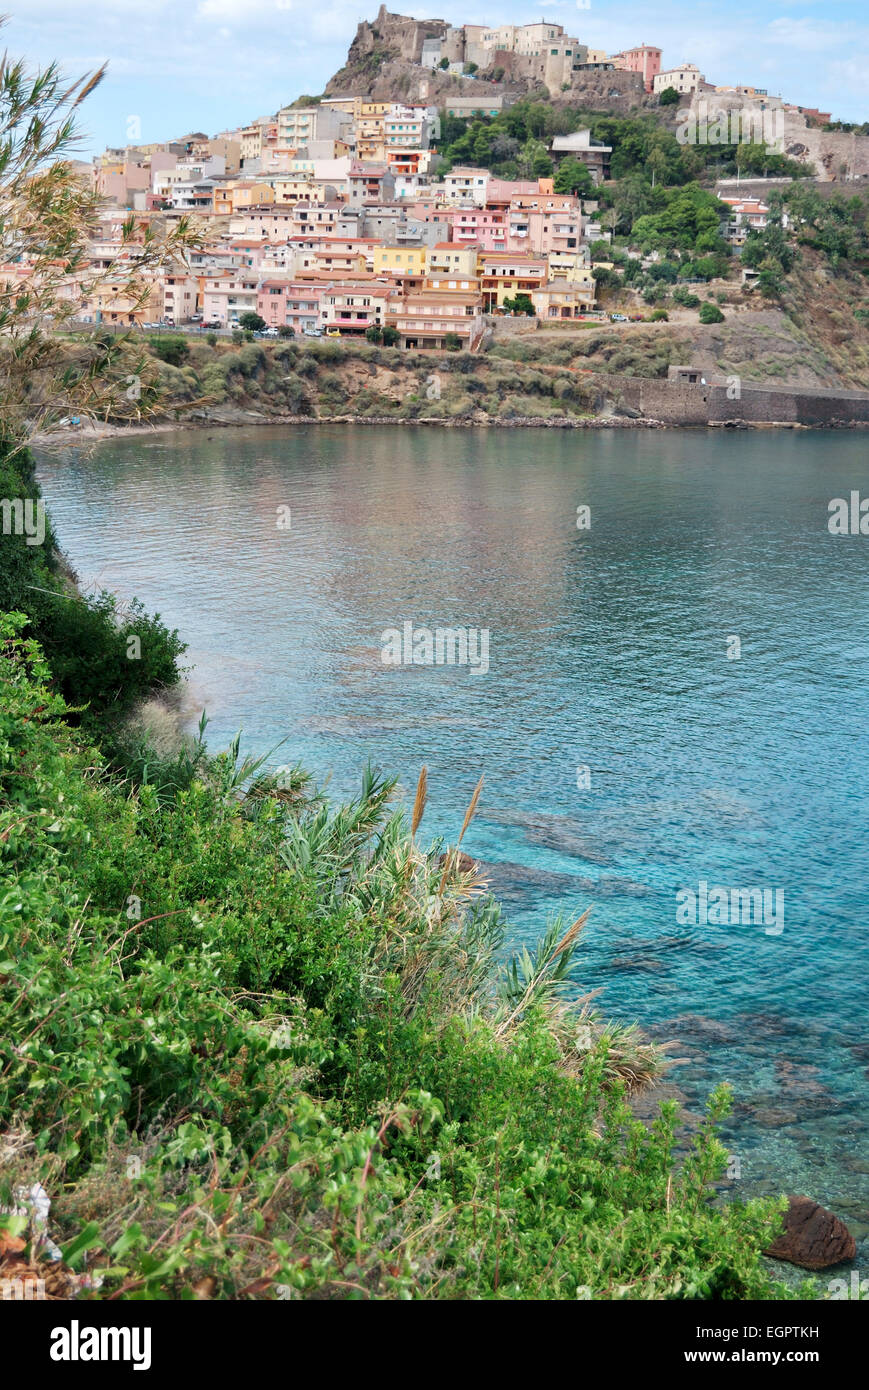 Old town of Sardinia Mediterranean. Italy. View of the village and Mediterranean sea Stock Photo